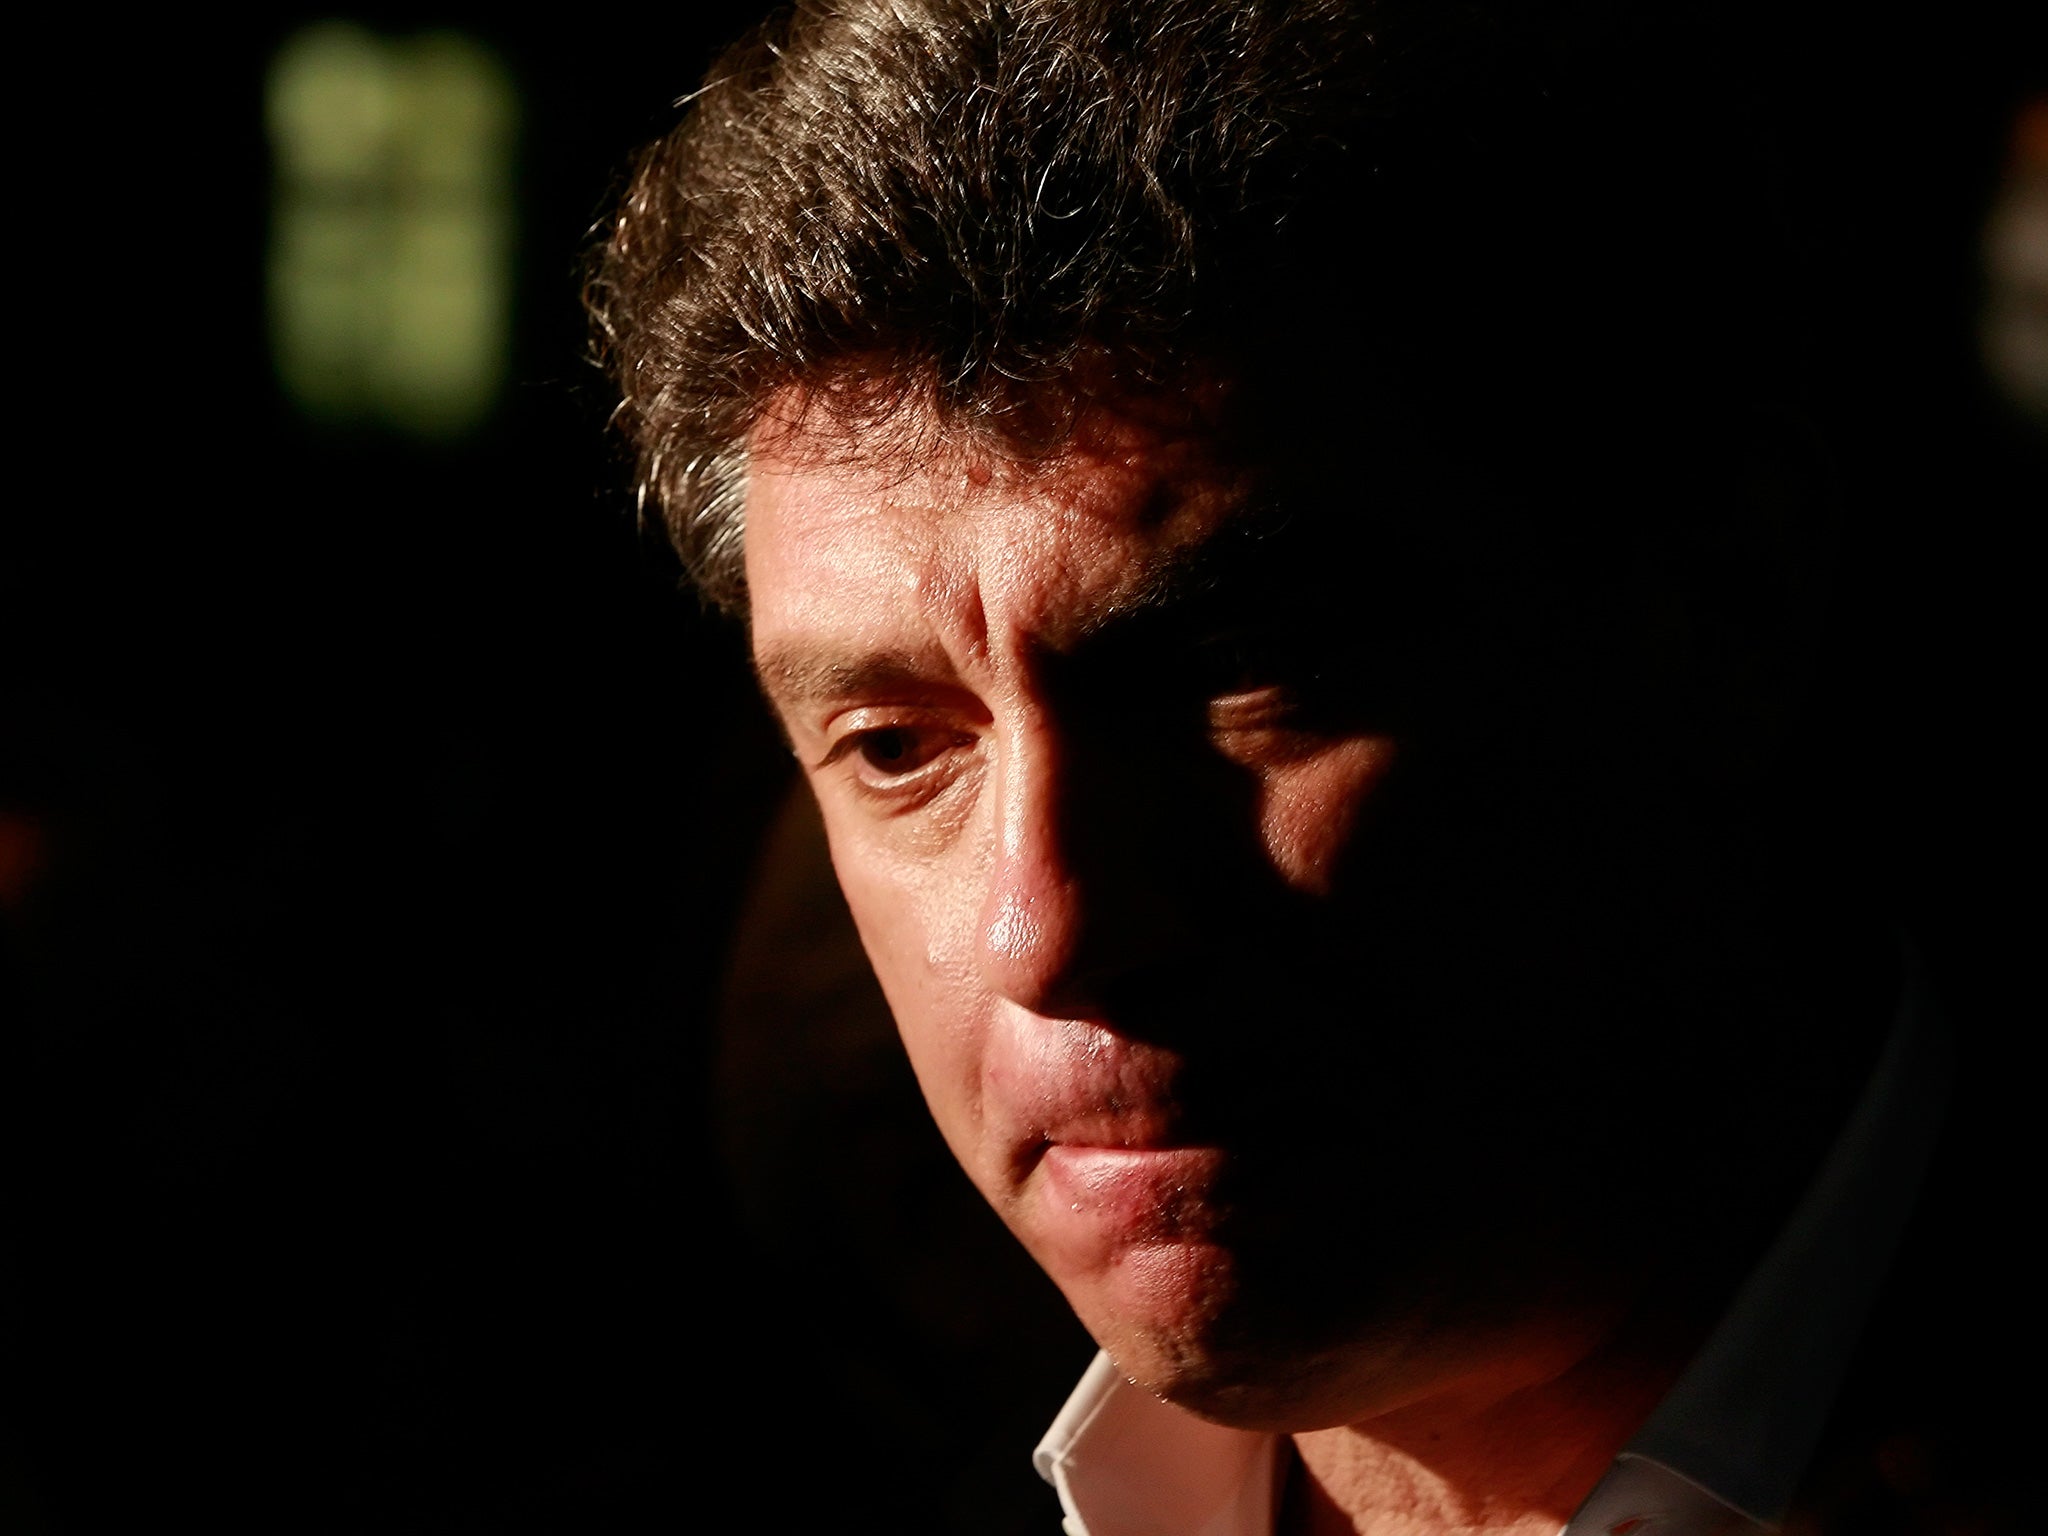 Boris Nemtsov was assassinated on 27 February